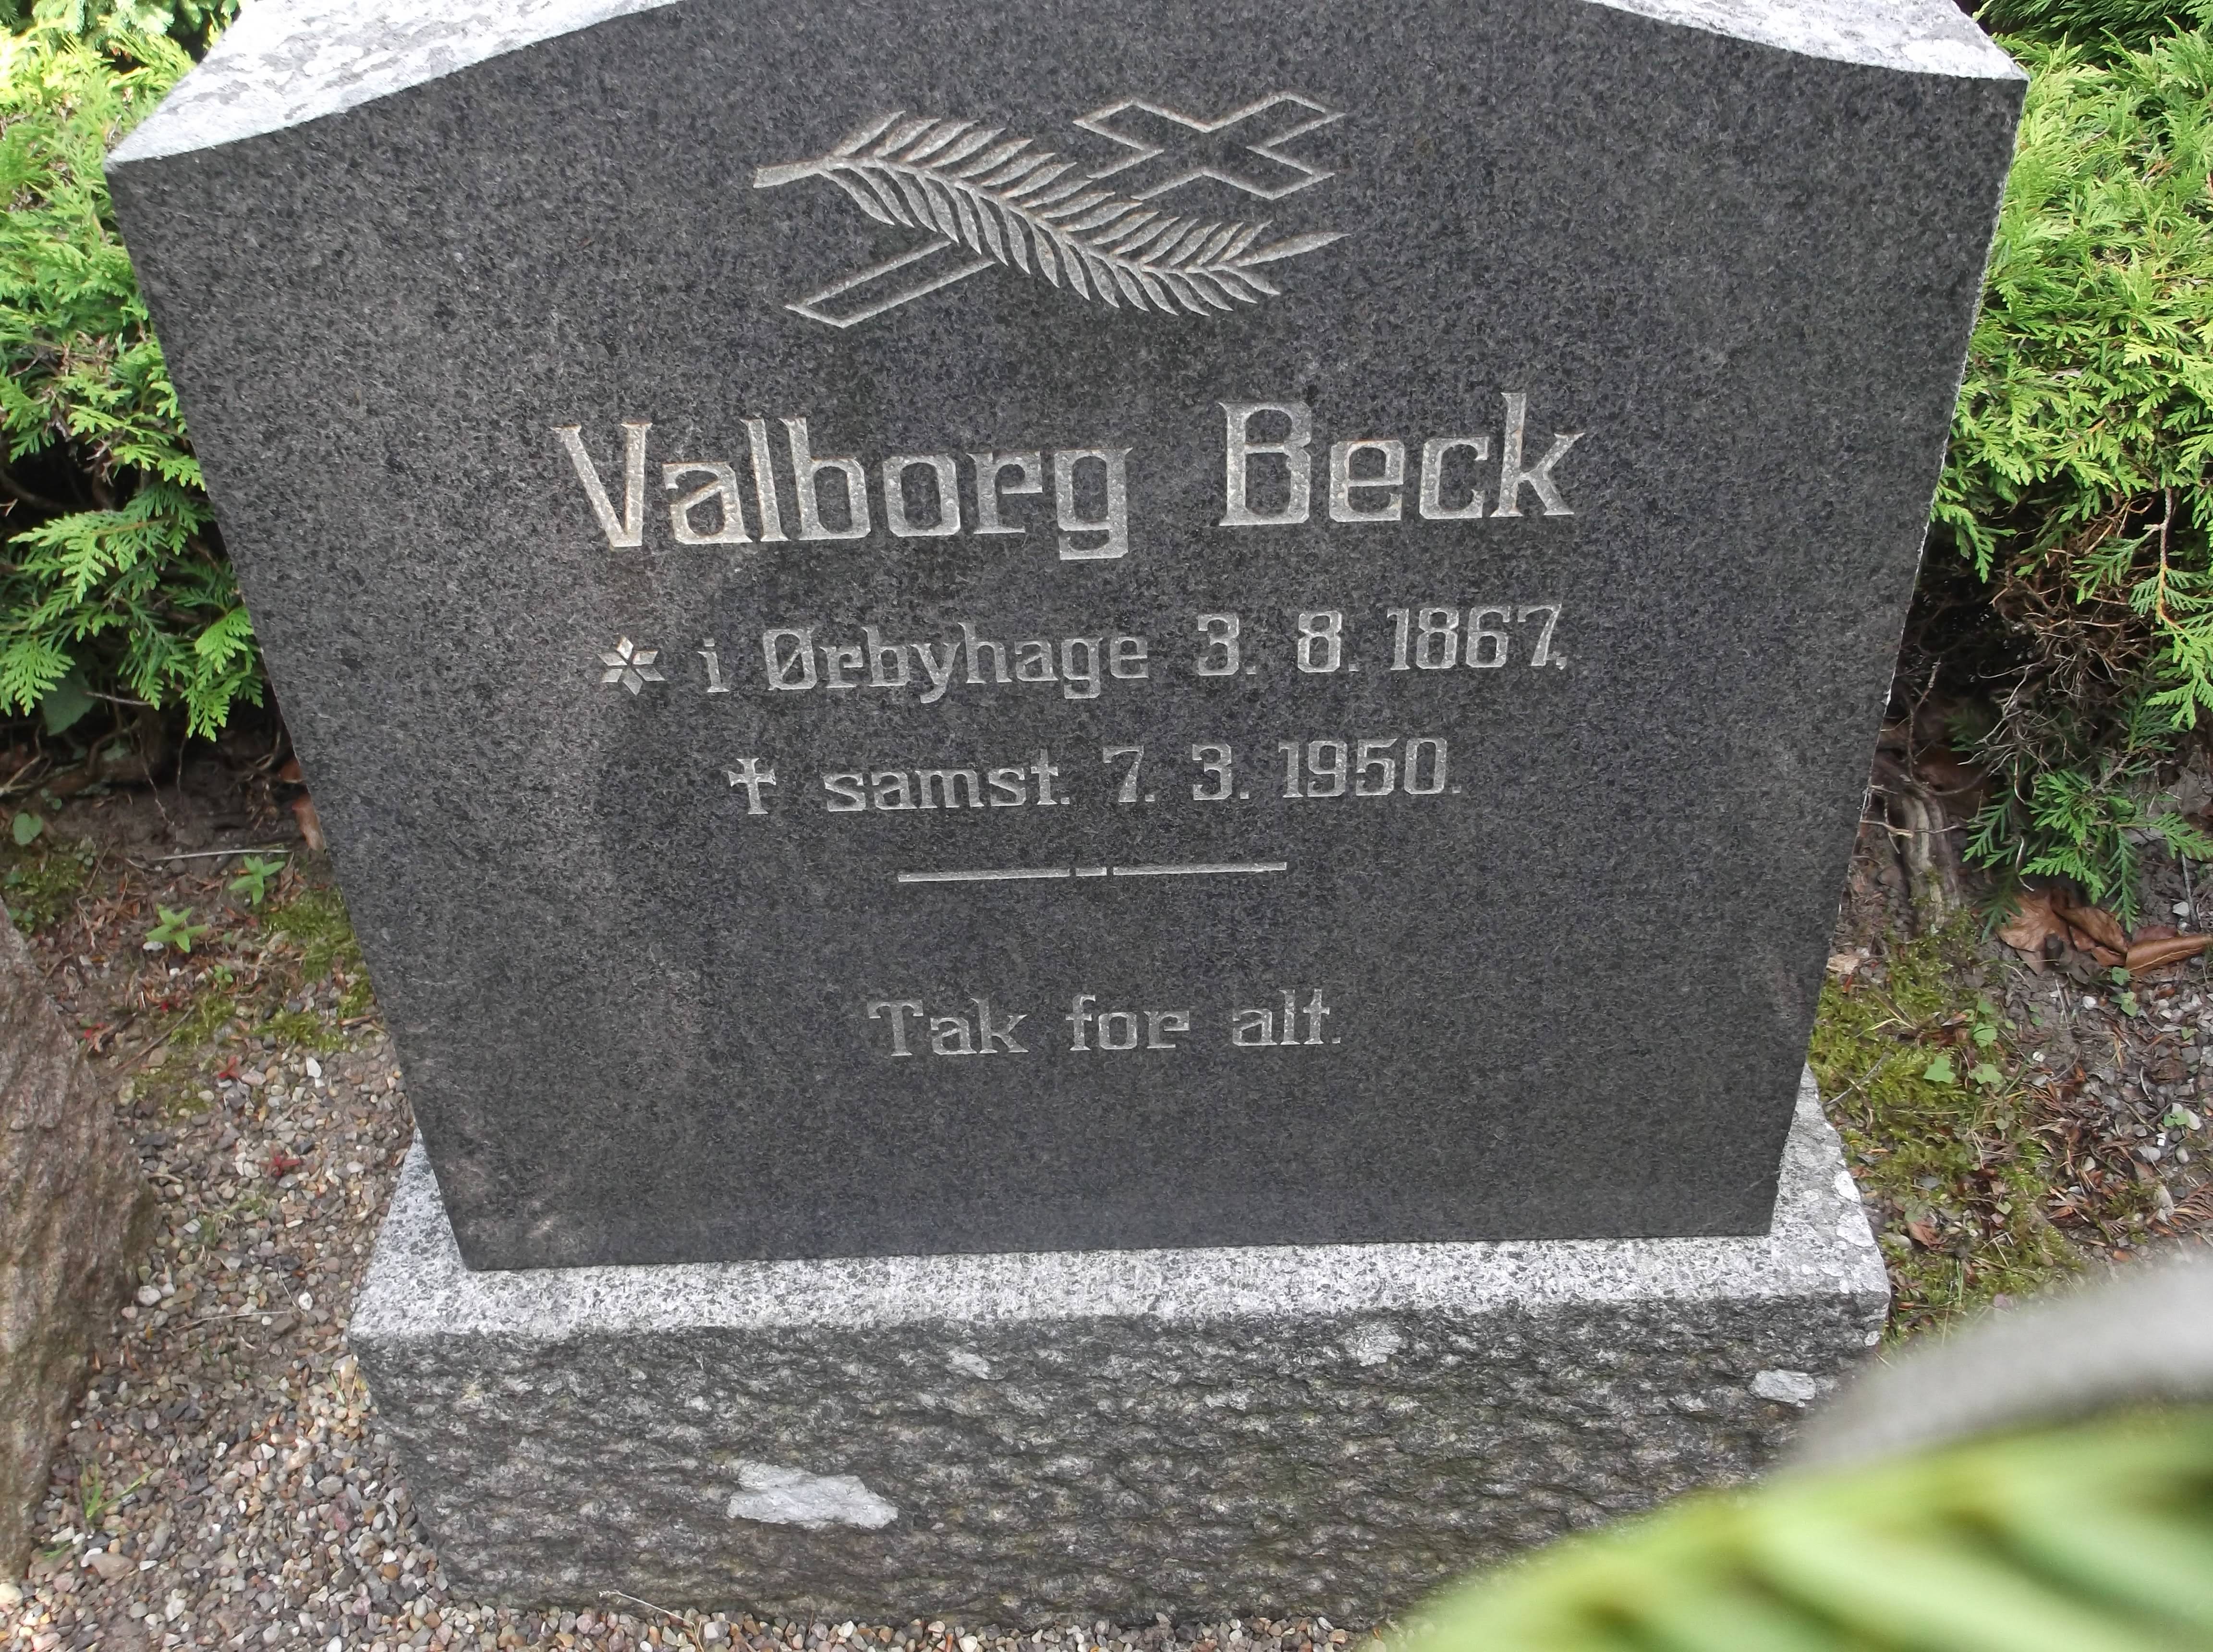 Valborg Beck